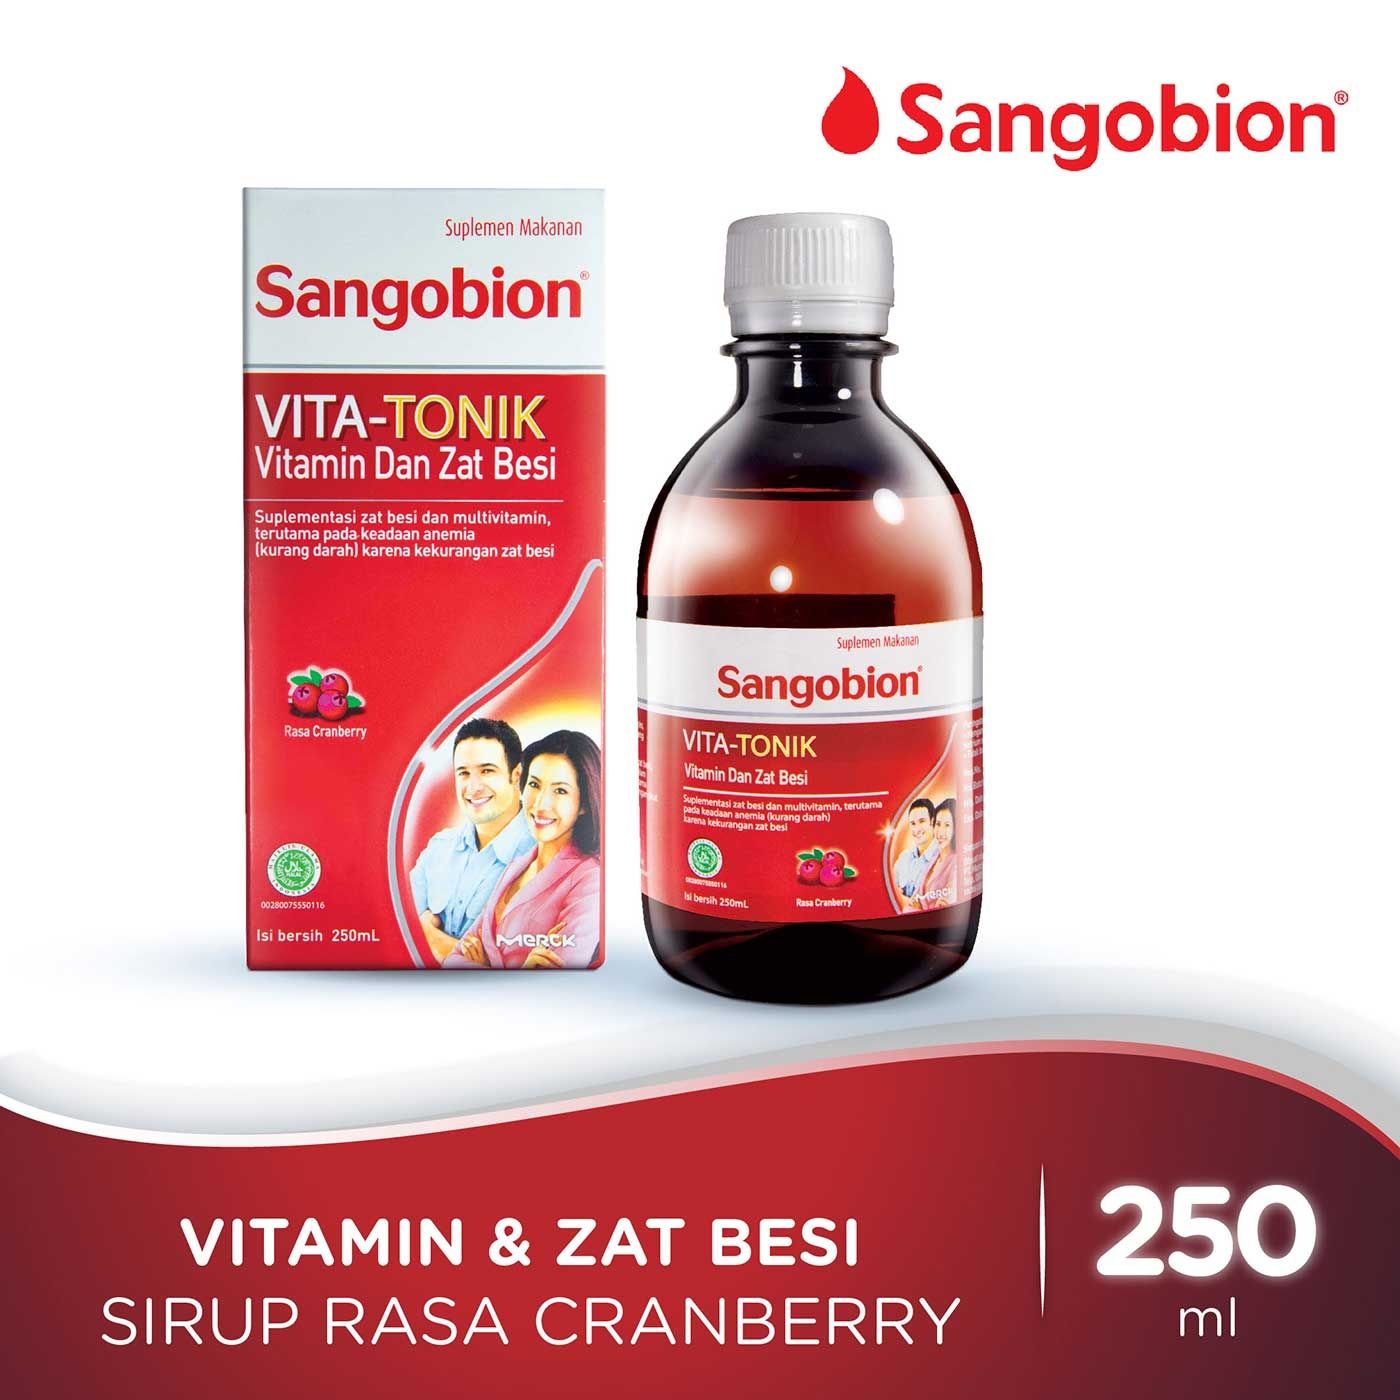 Sangobion Vita-Tonik Vitamin dan Zat Besi 250mL - 1